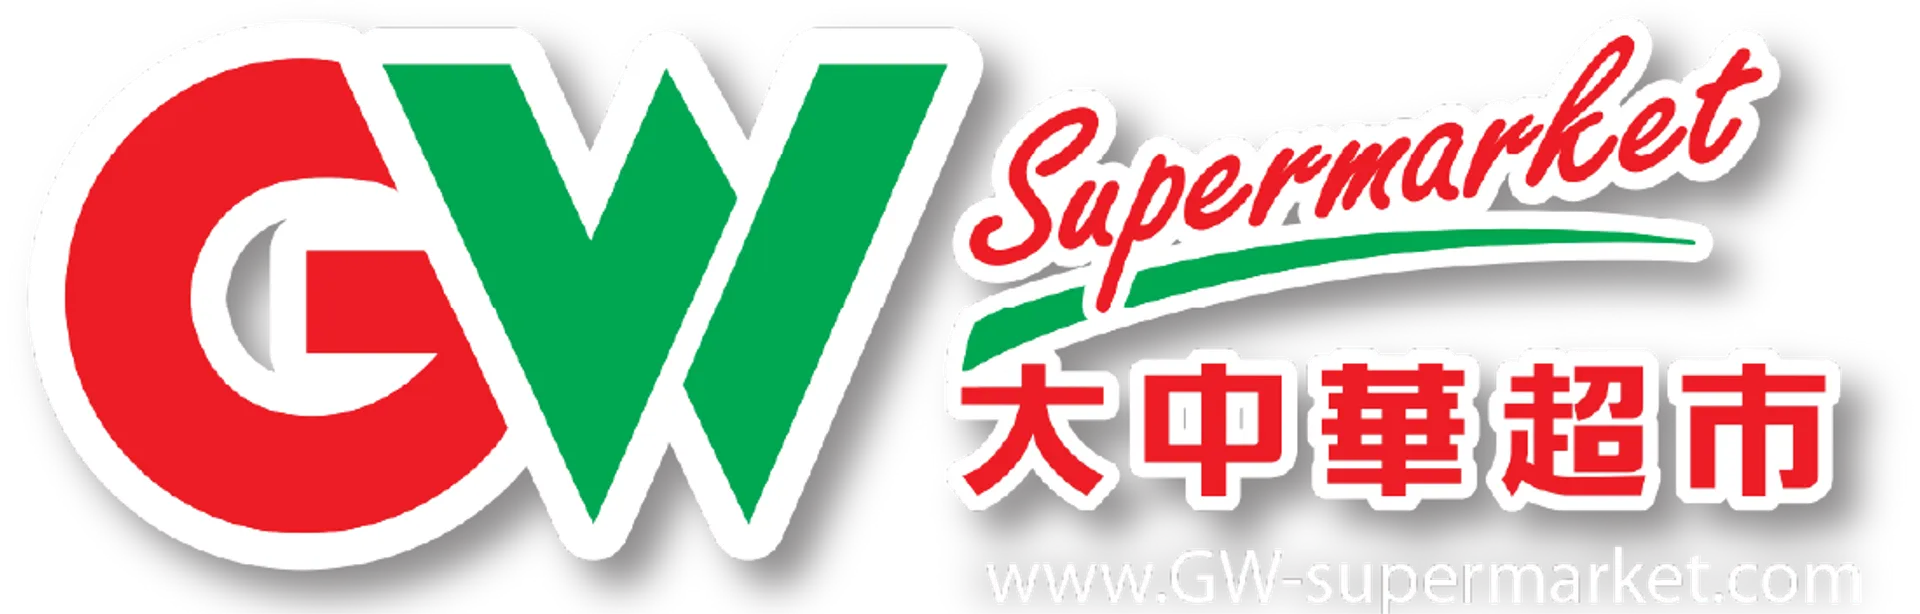 GREAT WALL SUPERMARKET logo